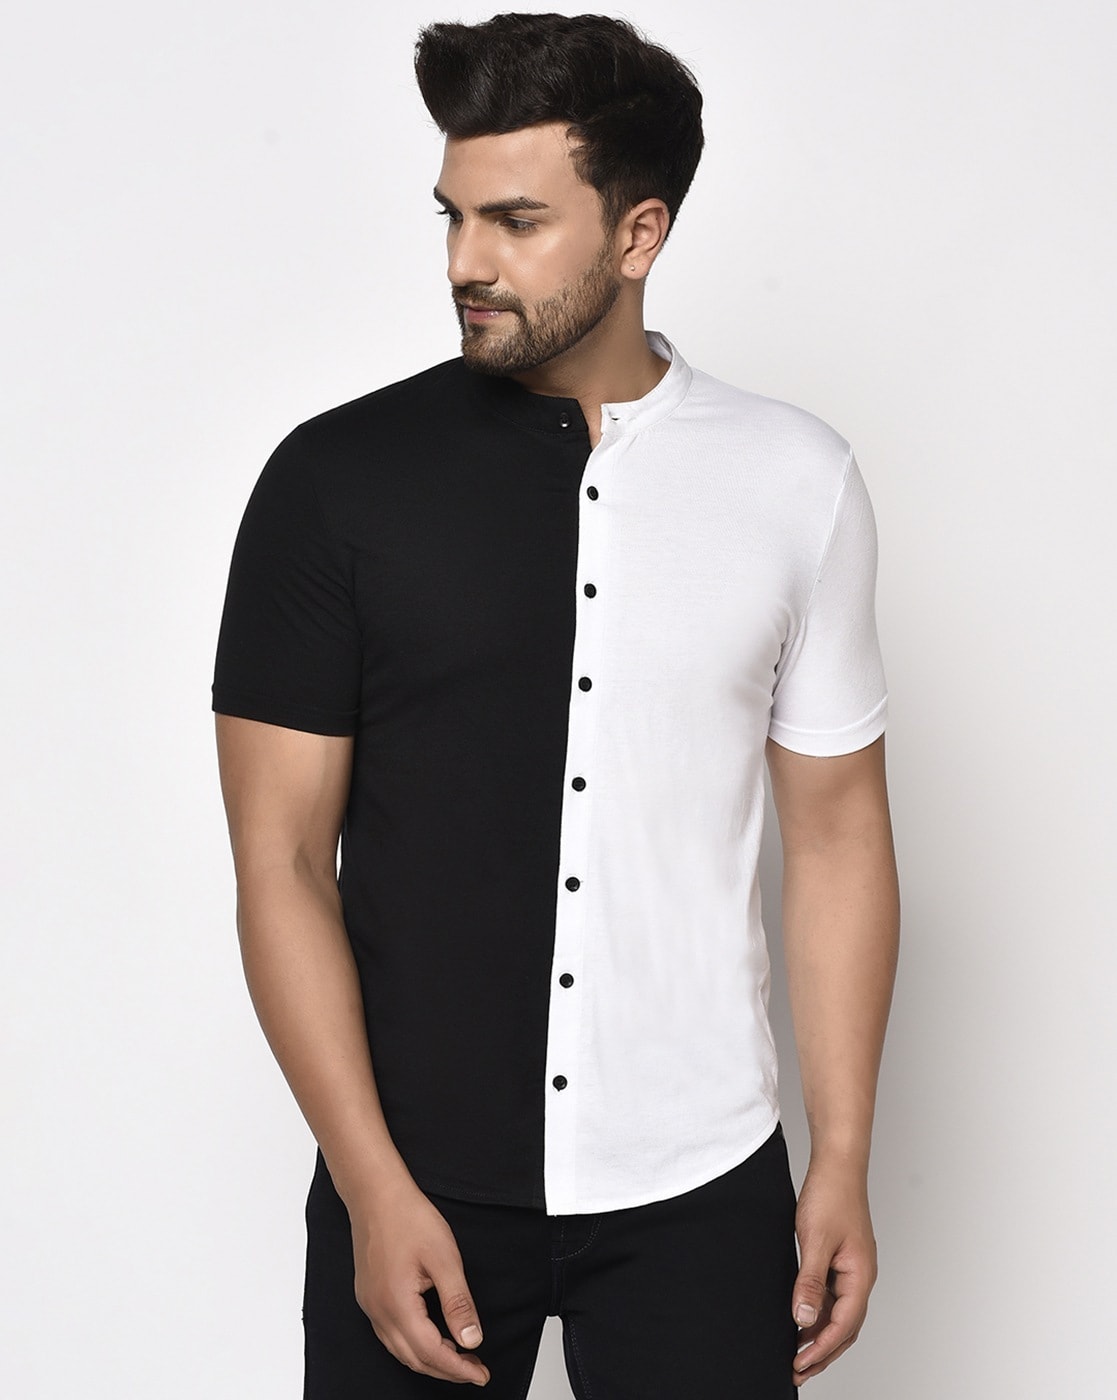 Buy Black & White Shirts for Men by GLITO Online